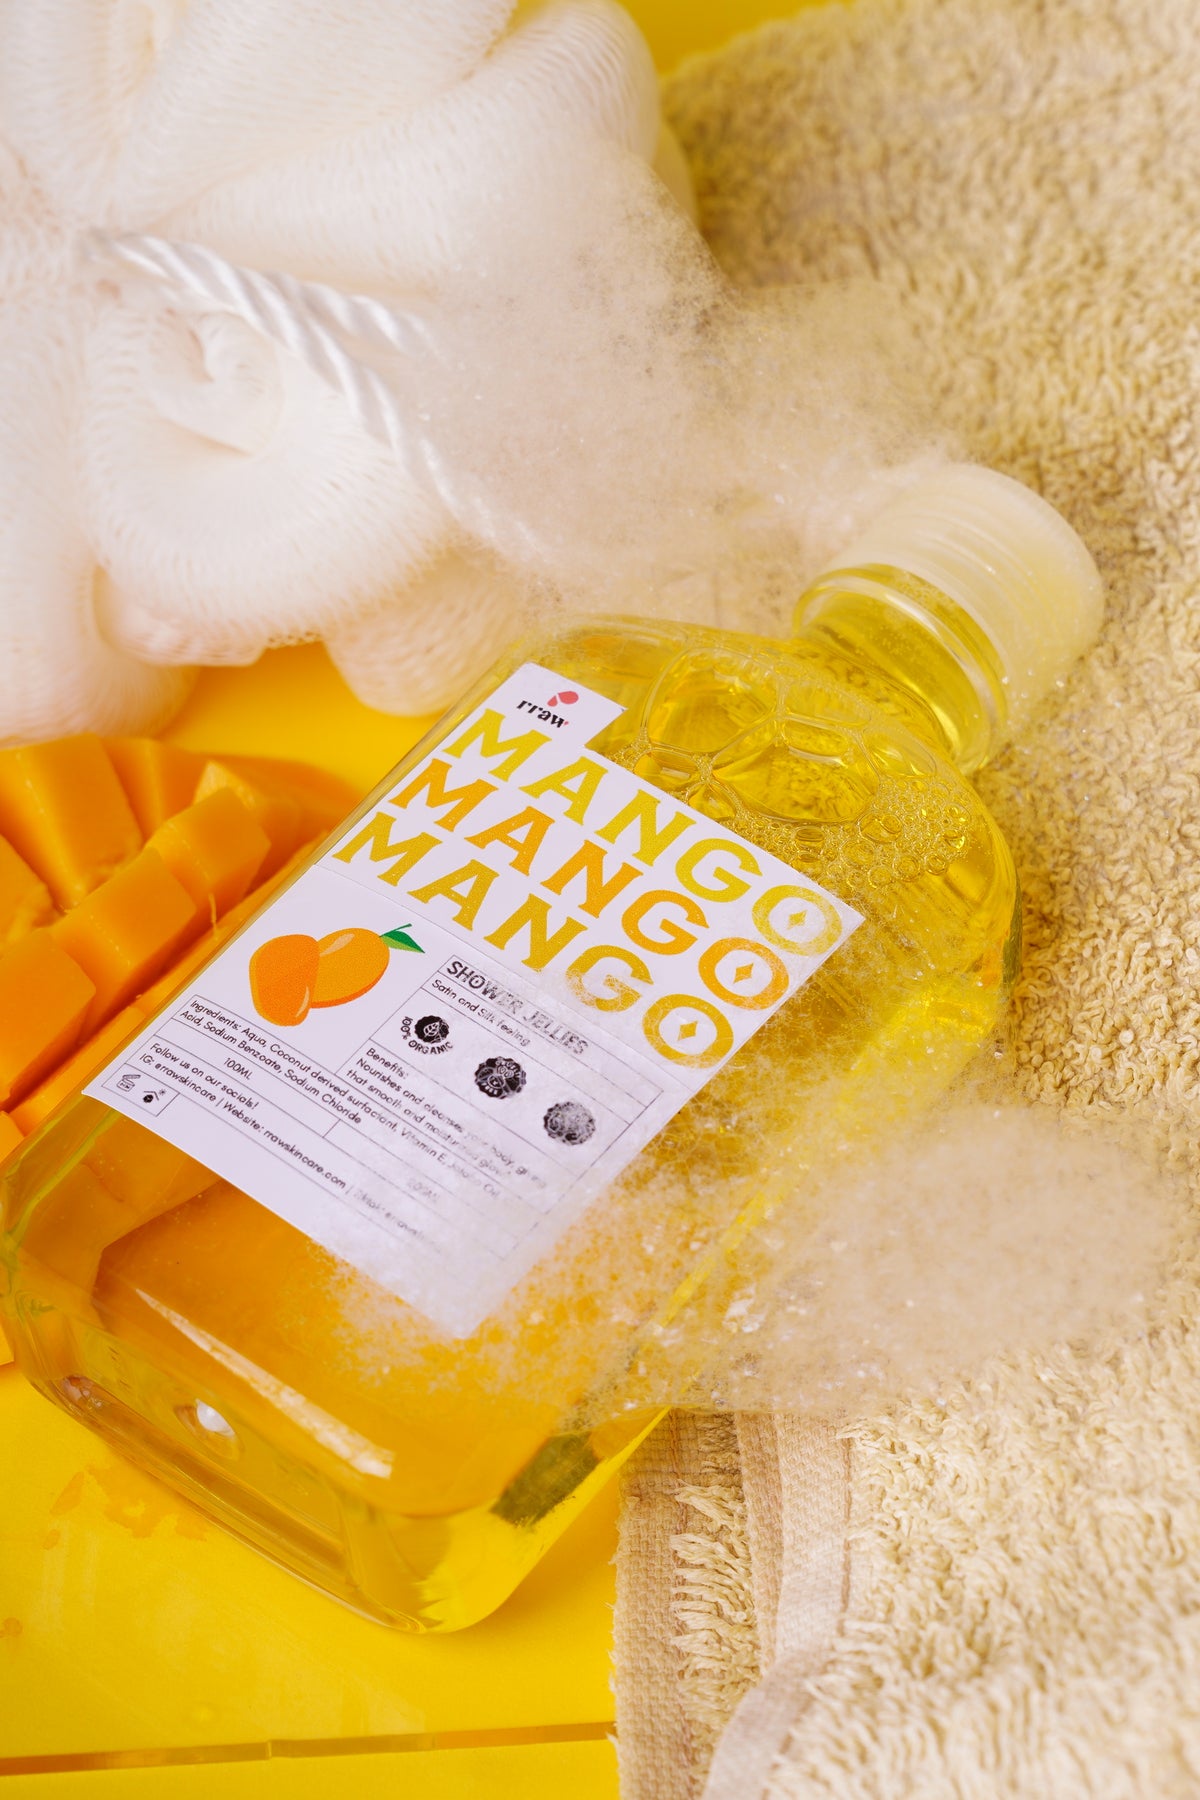 Mango Shower Jelly Body Wash Gel